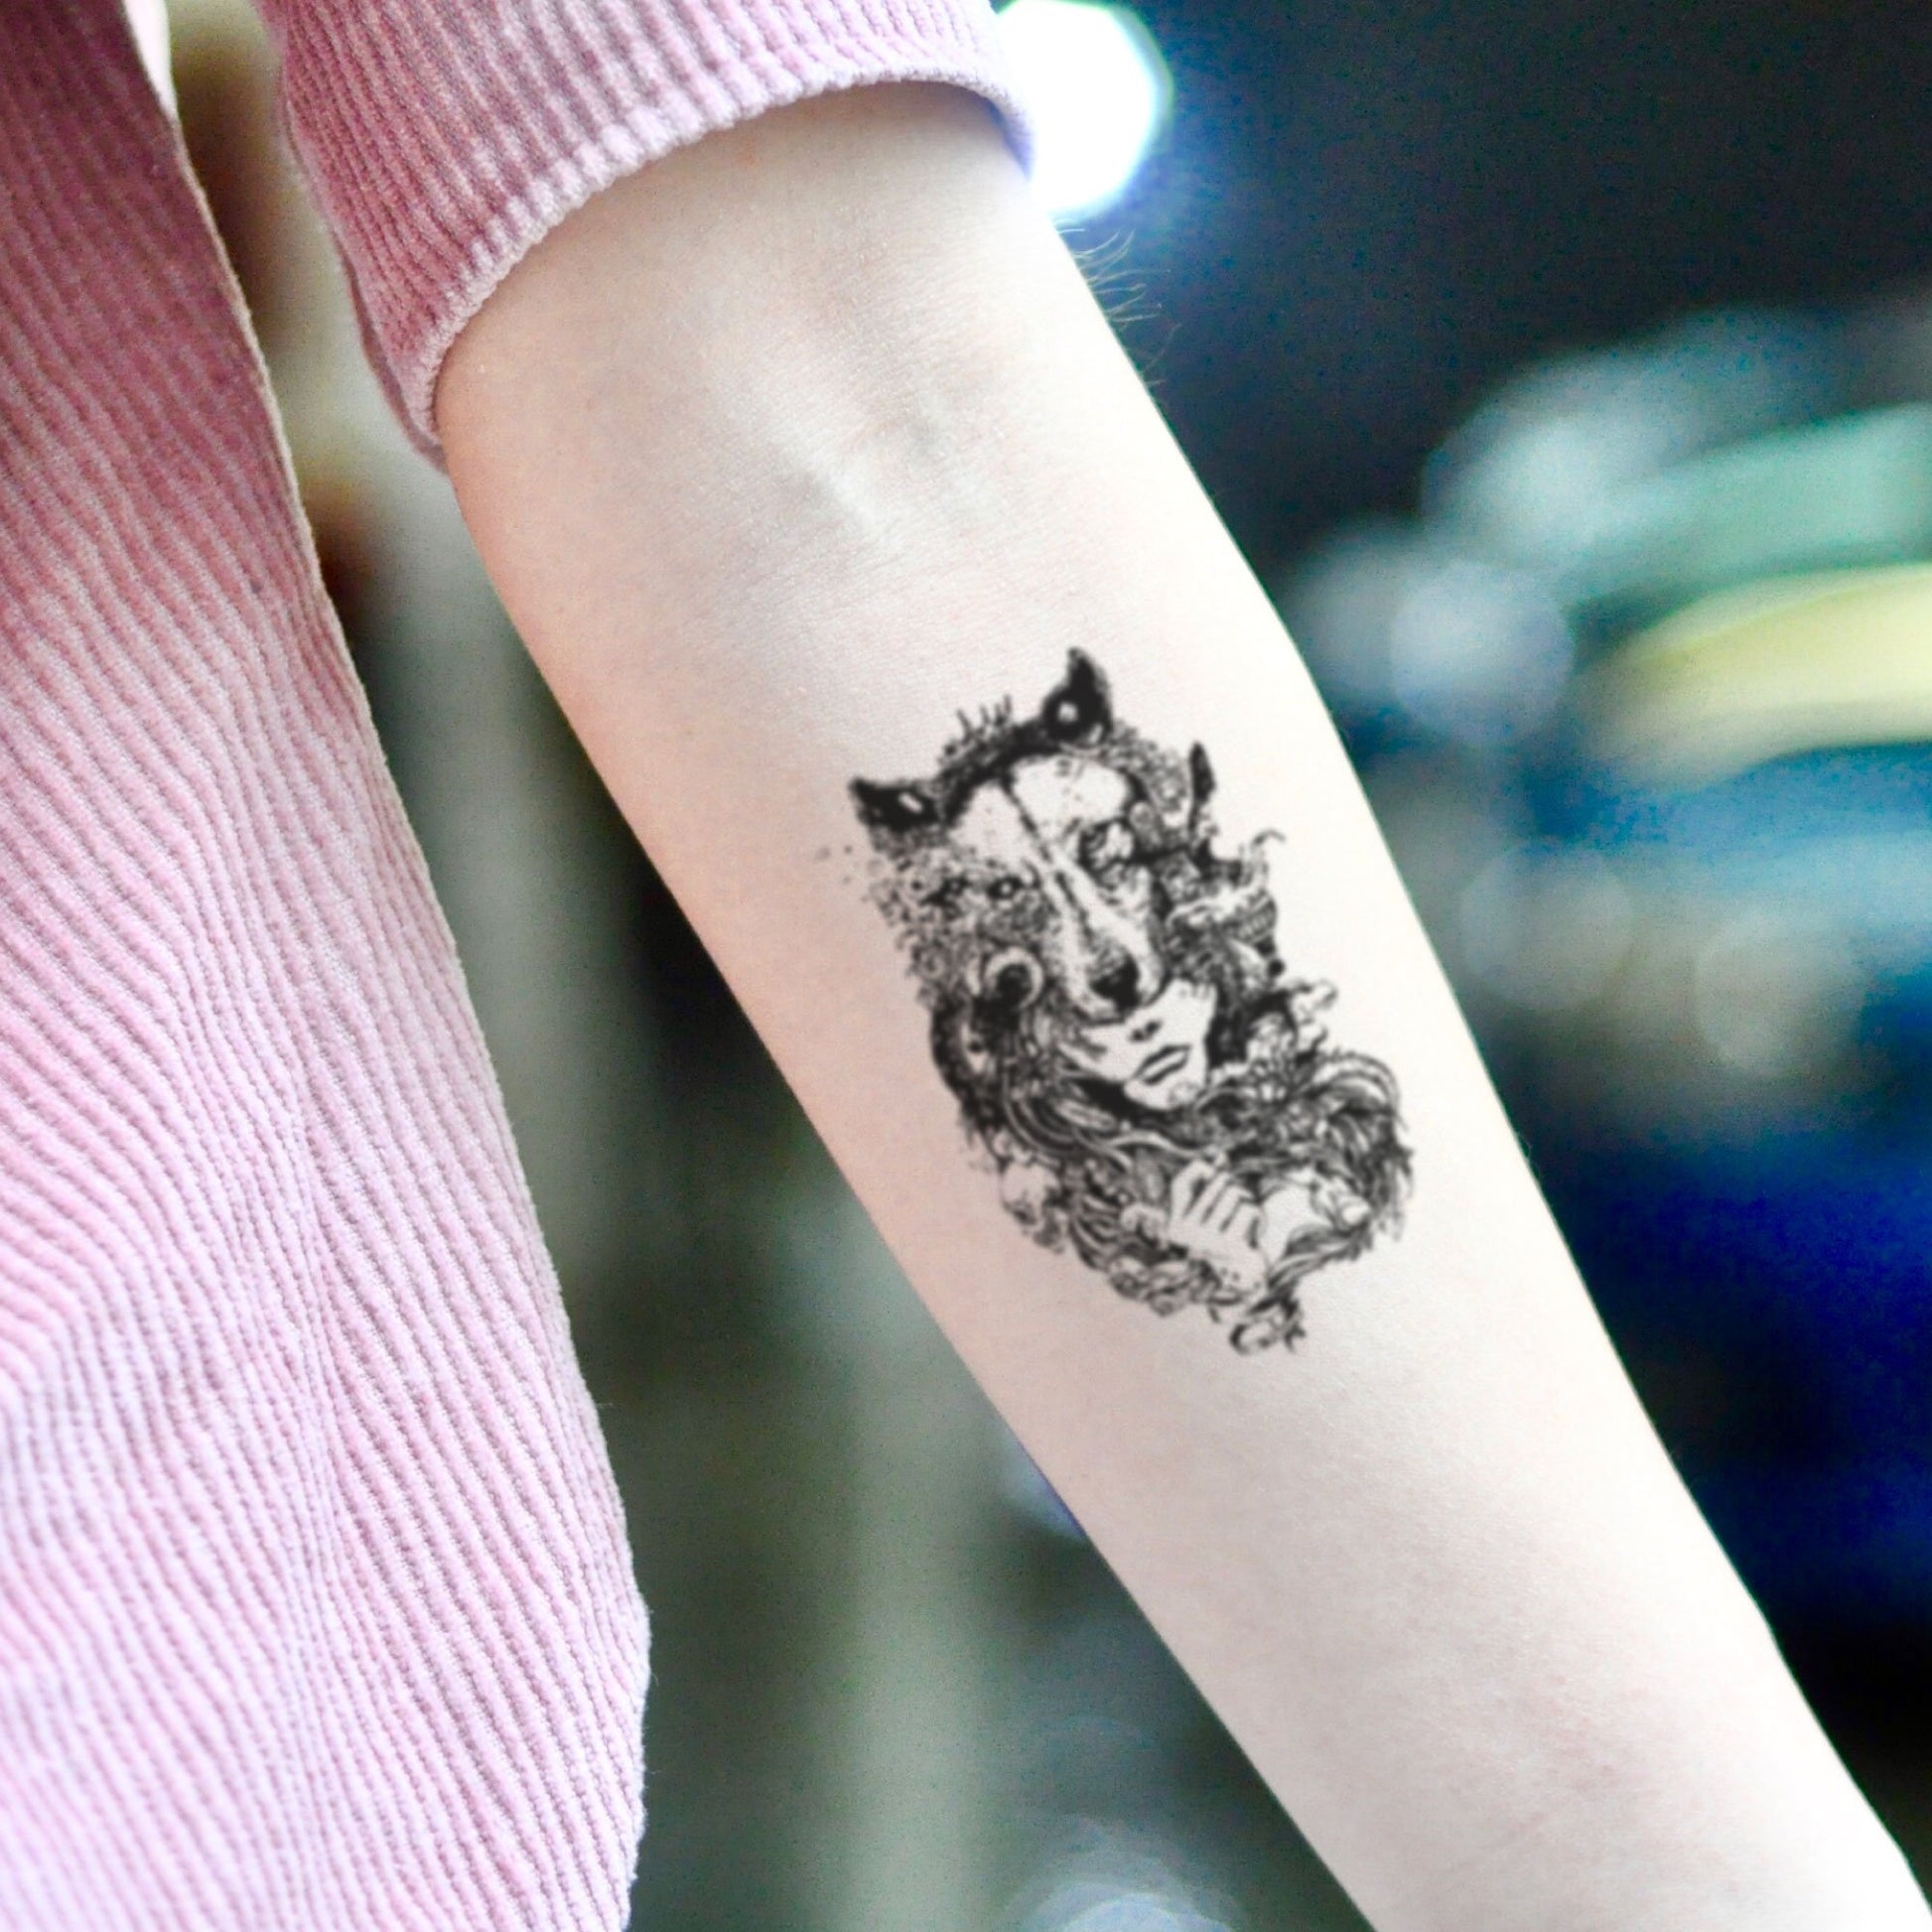 fake small she wolf twilight princess warrior girl woman illustrative temporary tattoo sticker design idea on inner arm